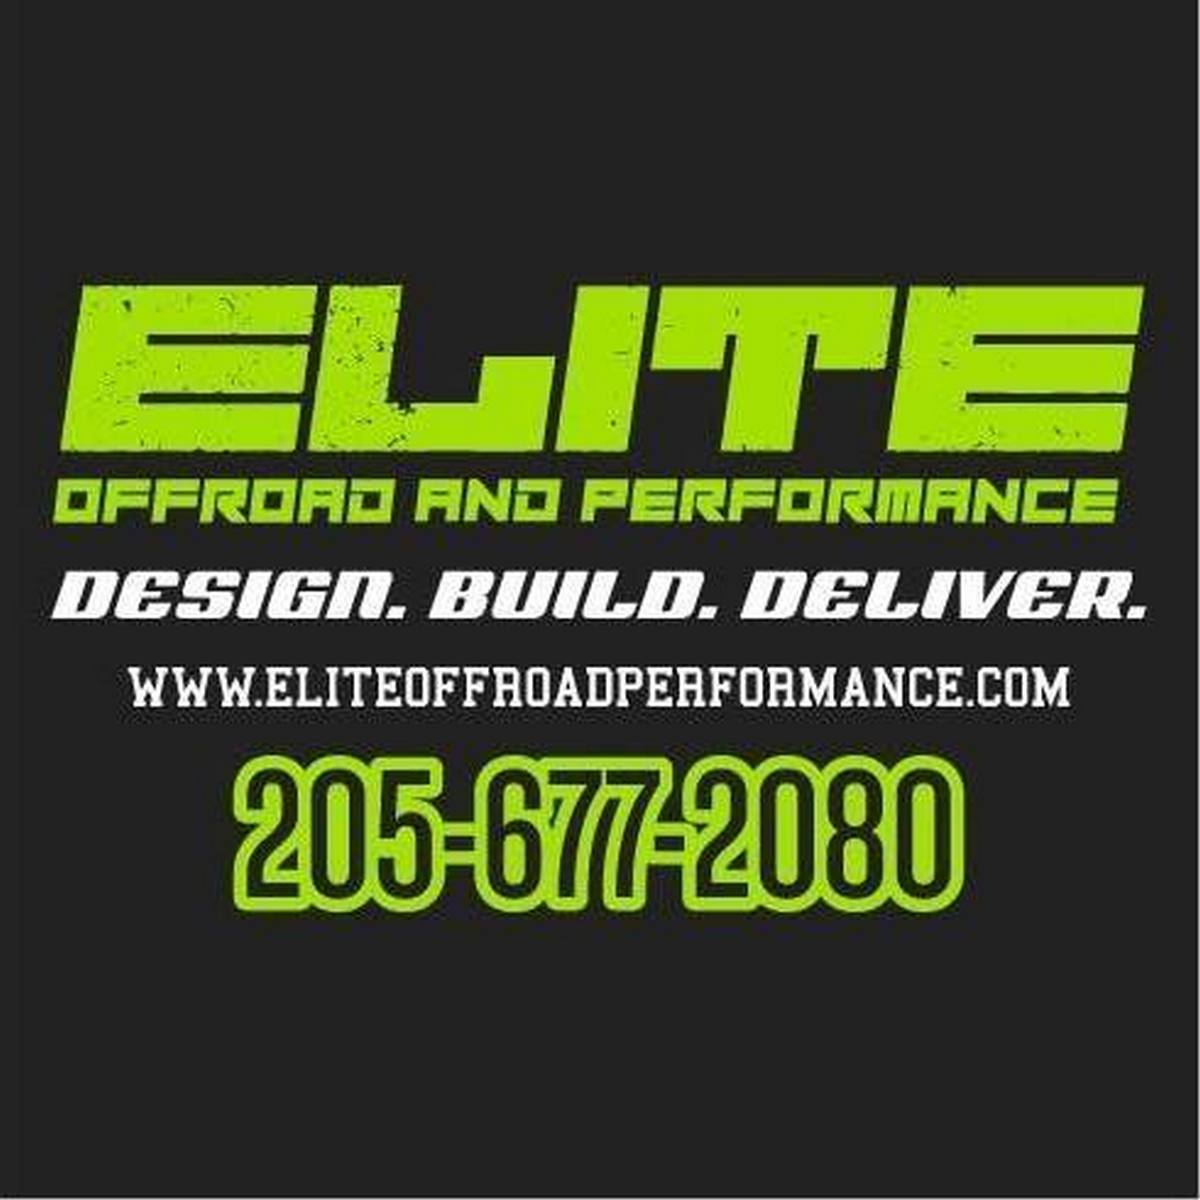 Elite-Offroad-Performance_logo-w-contact-info-1.jpg